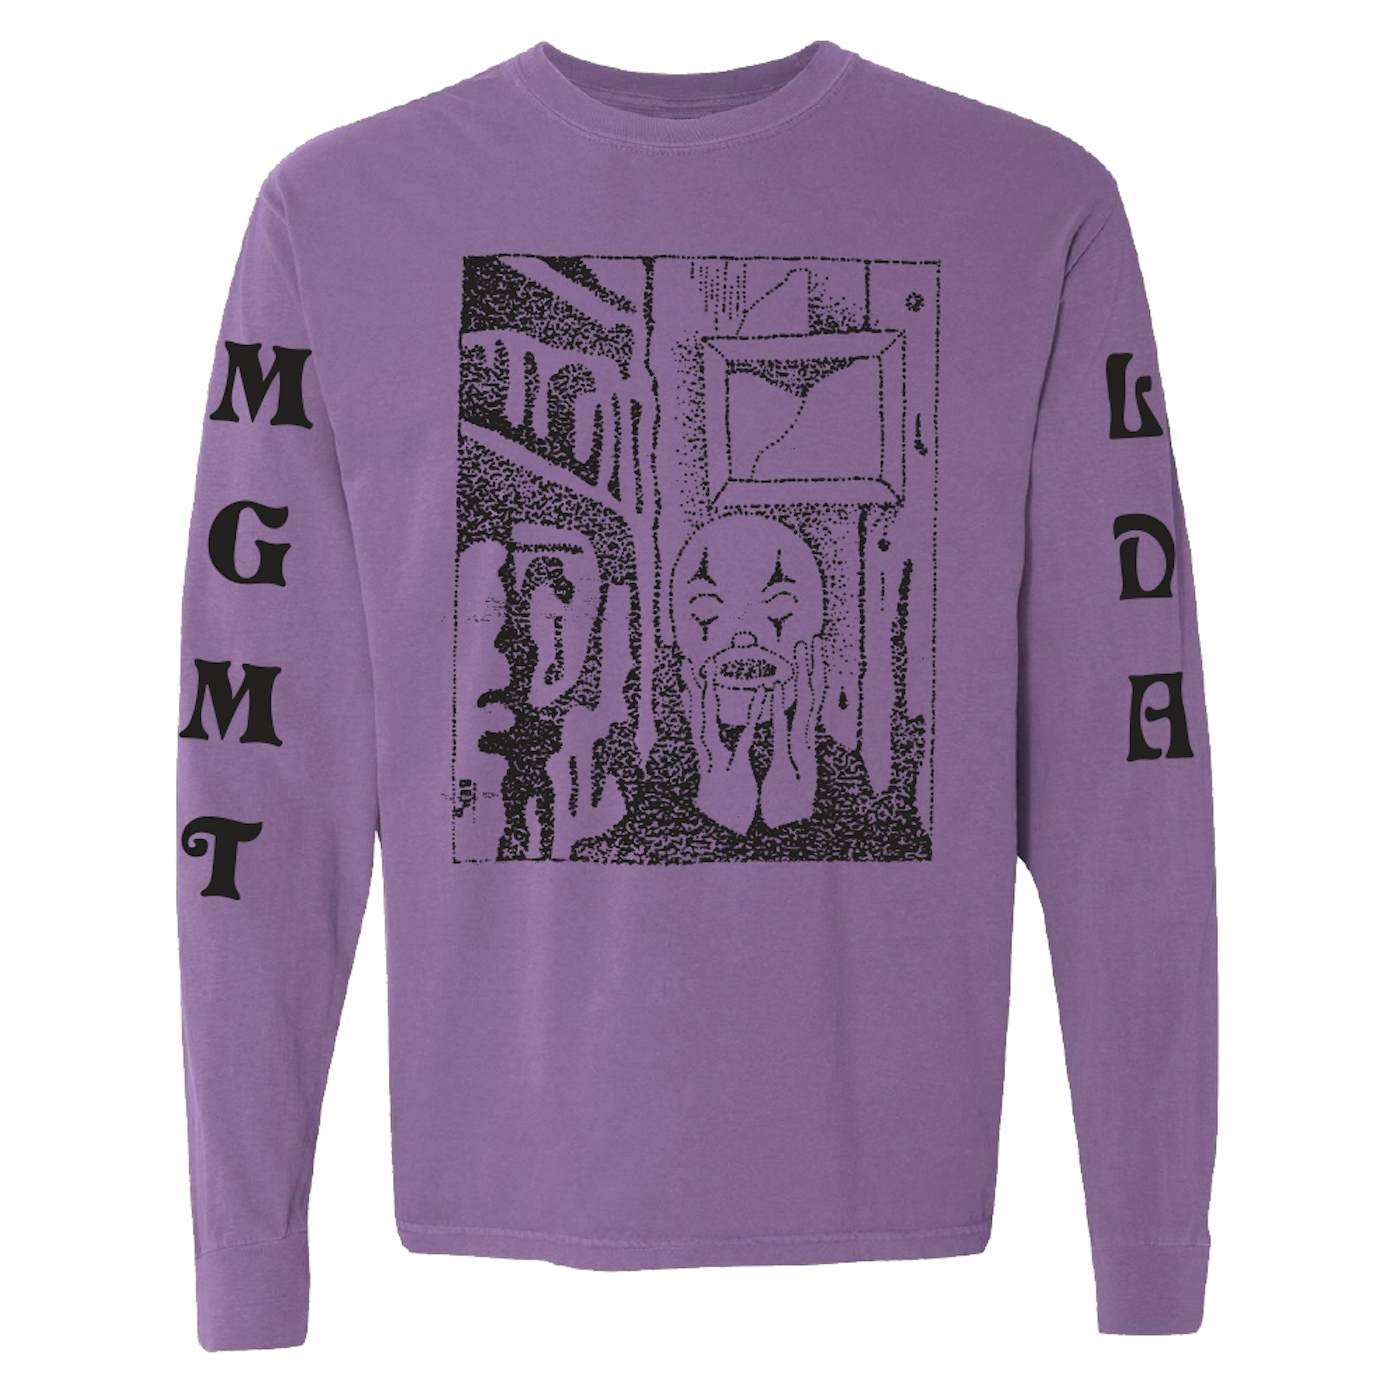 MGMT Little Dark Age [VIOLET] L/S T-shirt